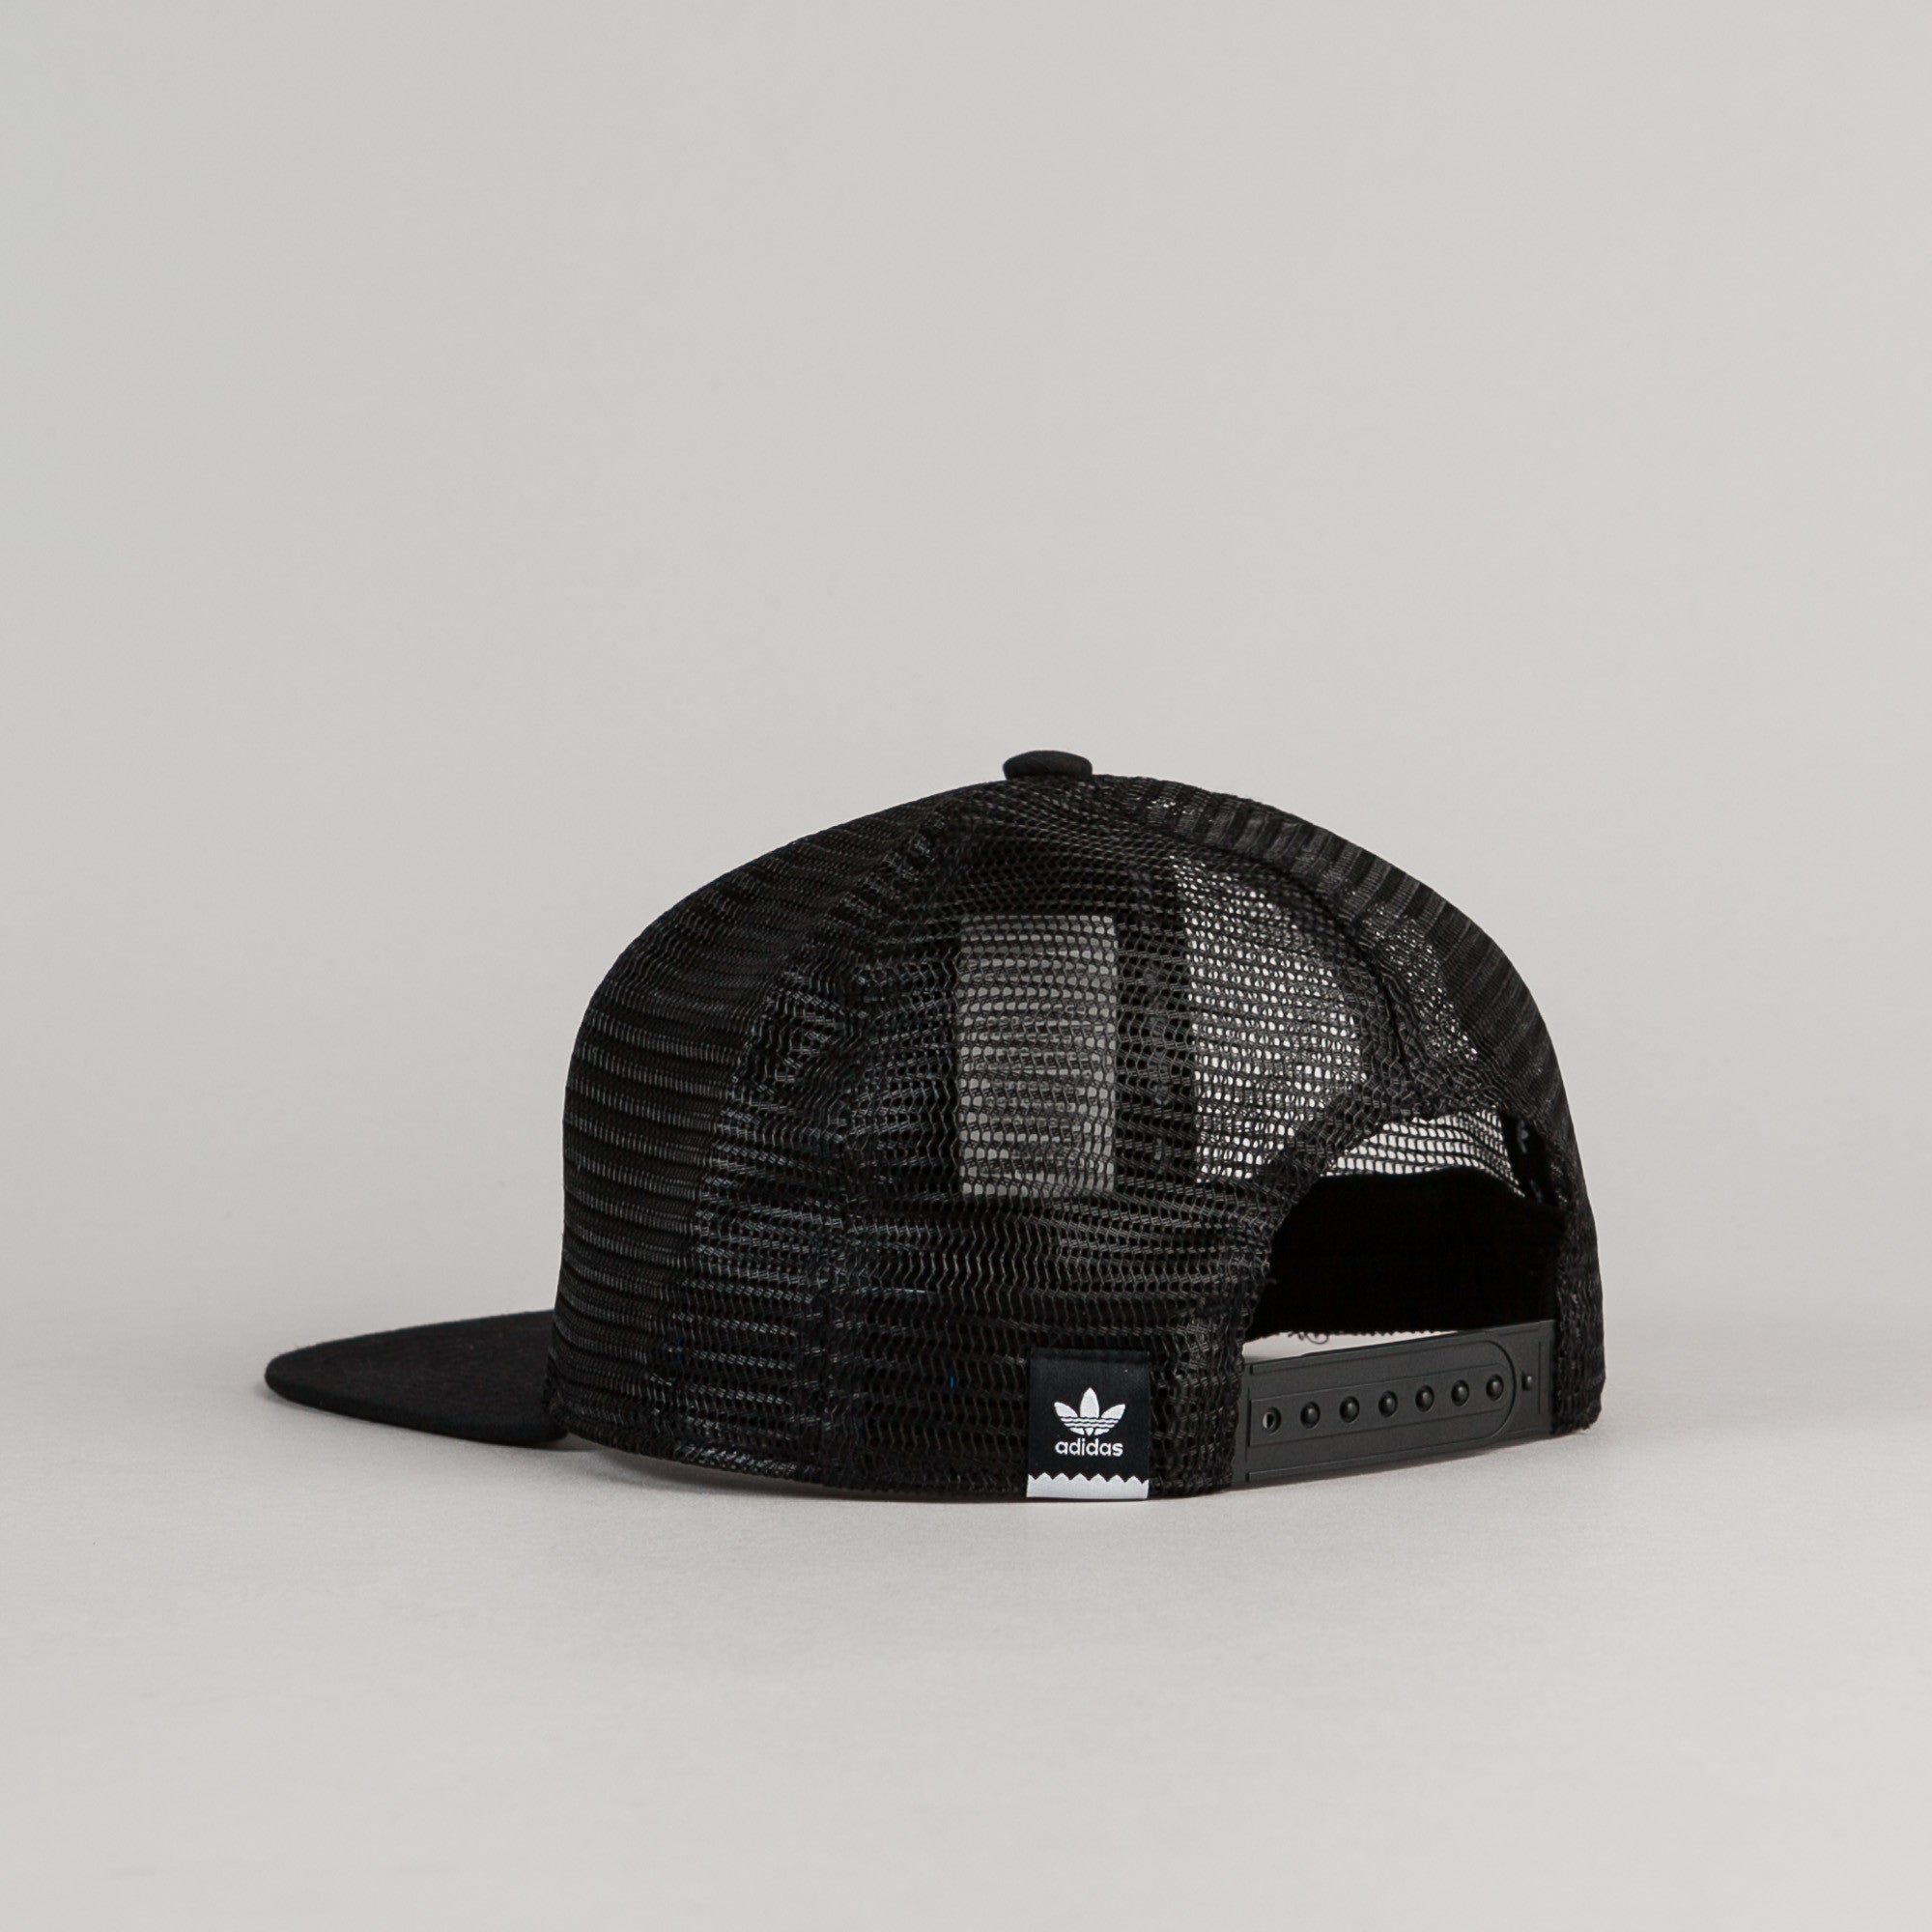 adidas black trucker cap